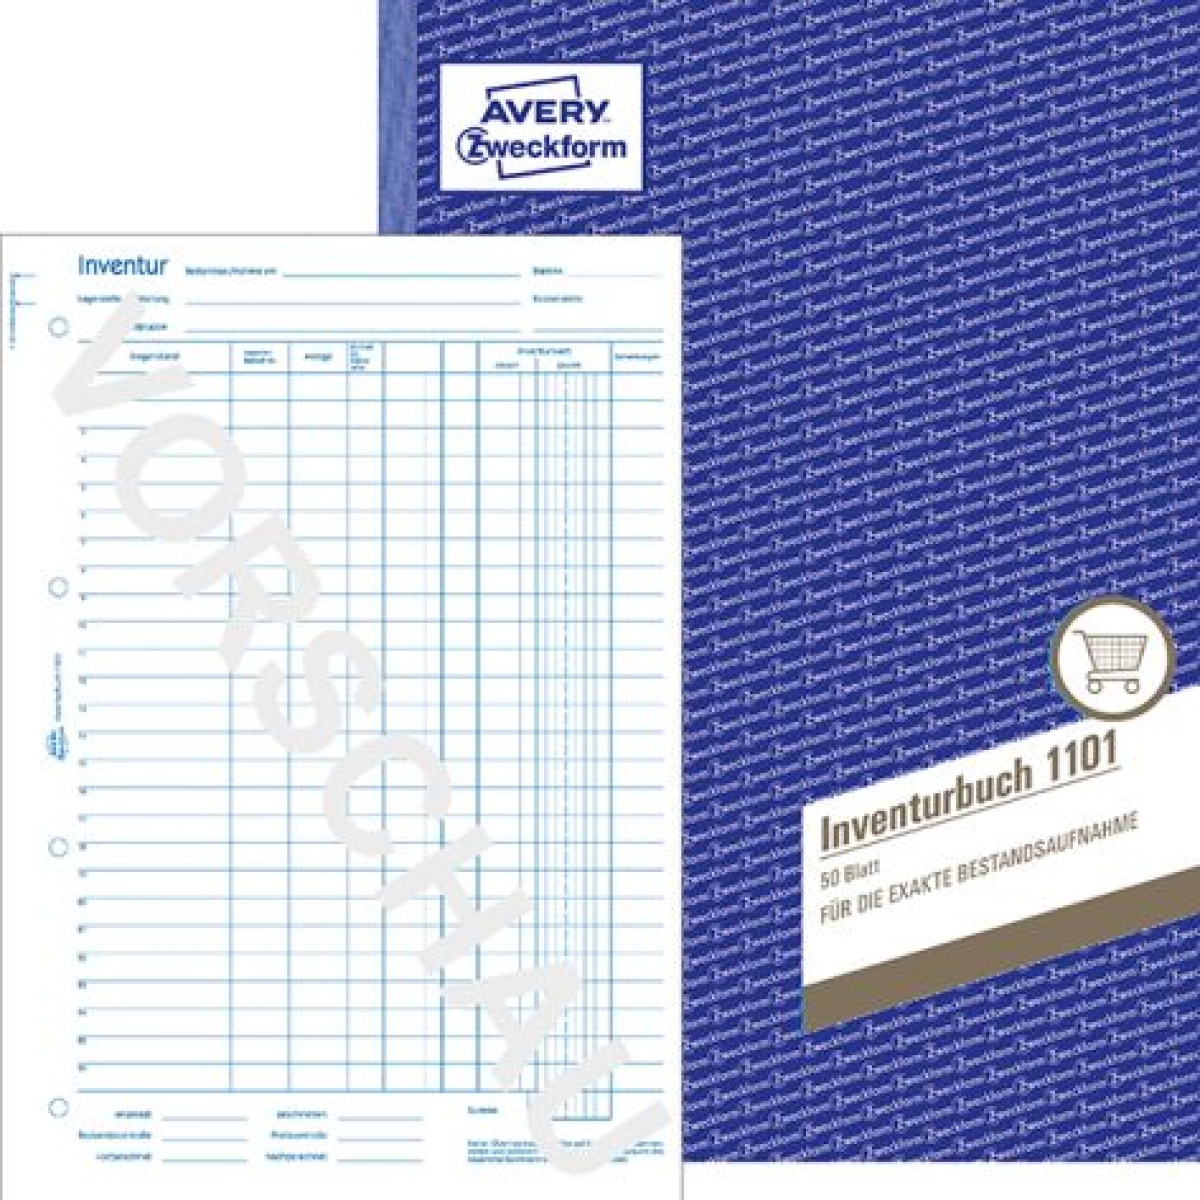 ZweckformInventory book A4 50 sheets 1101Article-No: 4004182011010